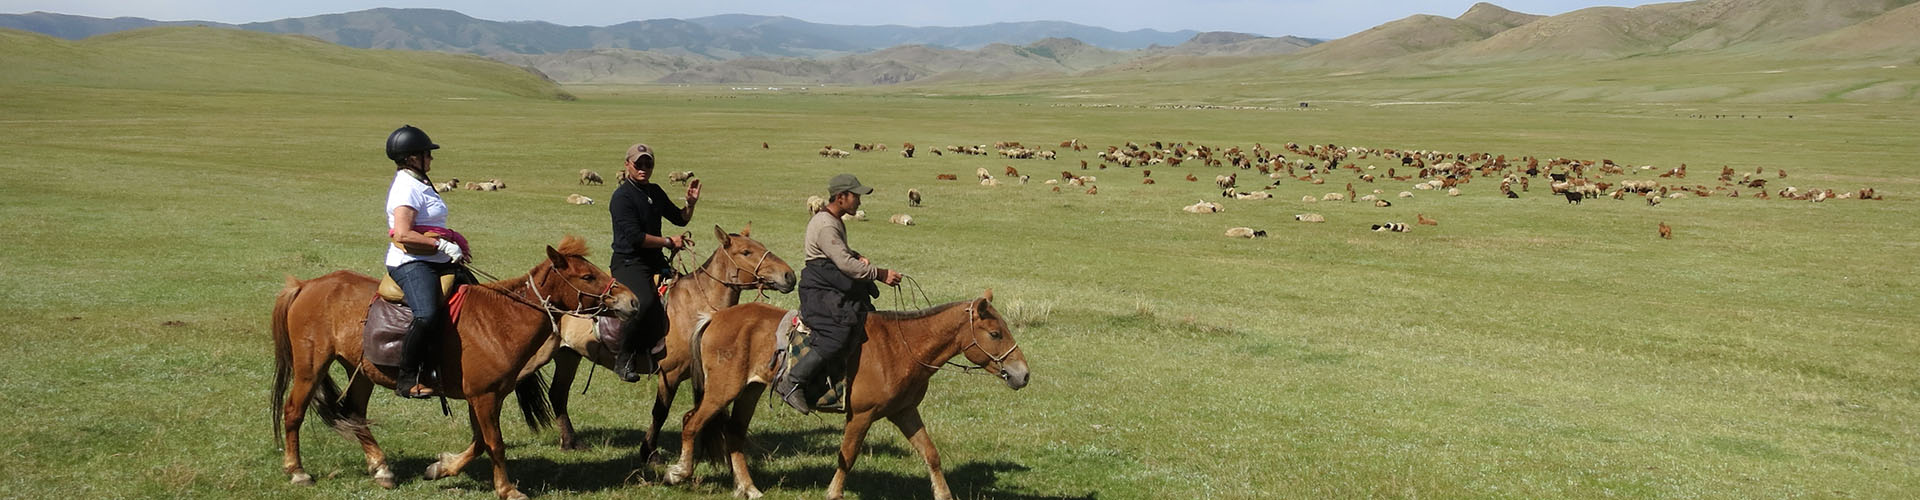 Mongolia travel and tour